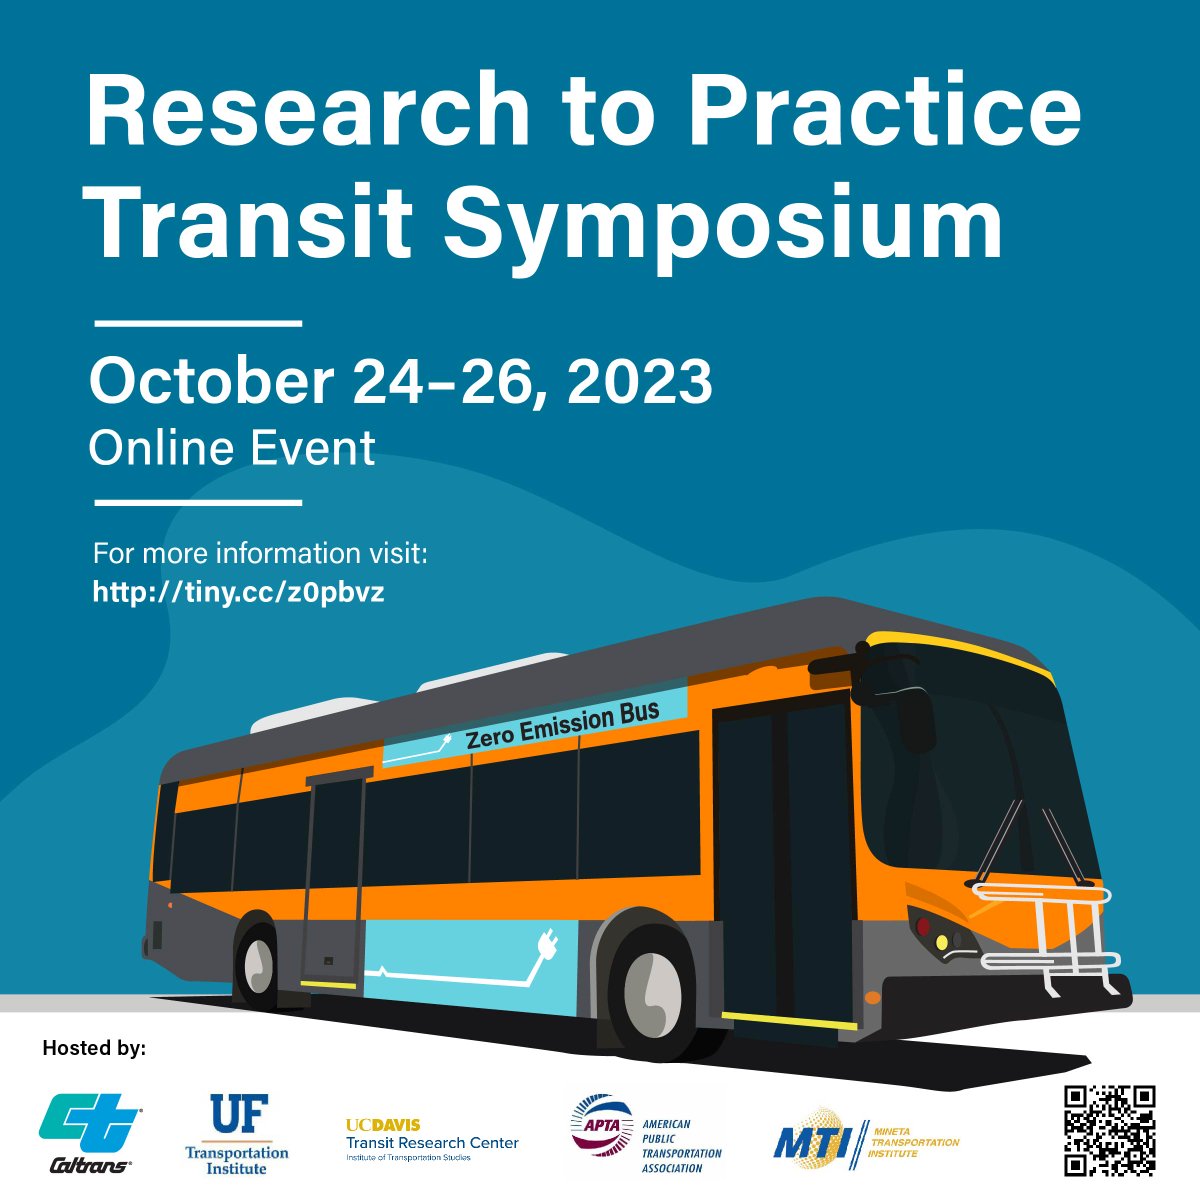 Research to Practice Transit Symposium tiny.cc/z0pbvz